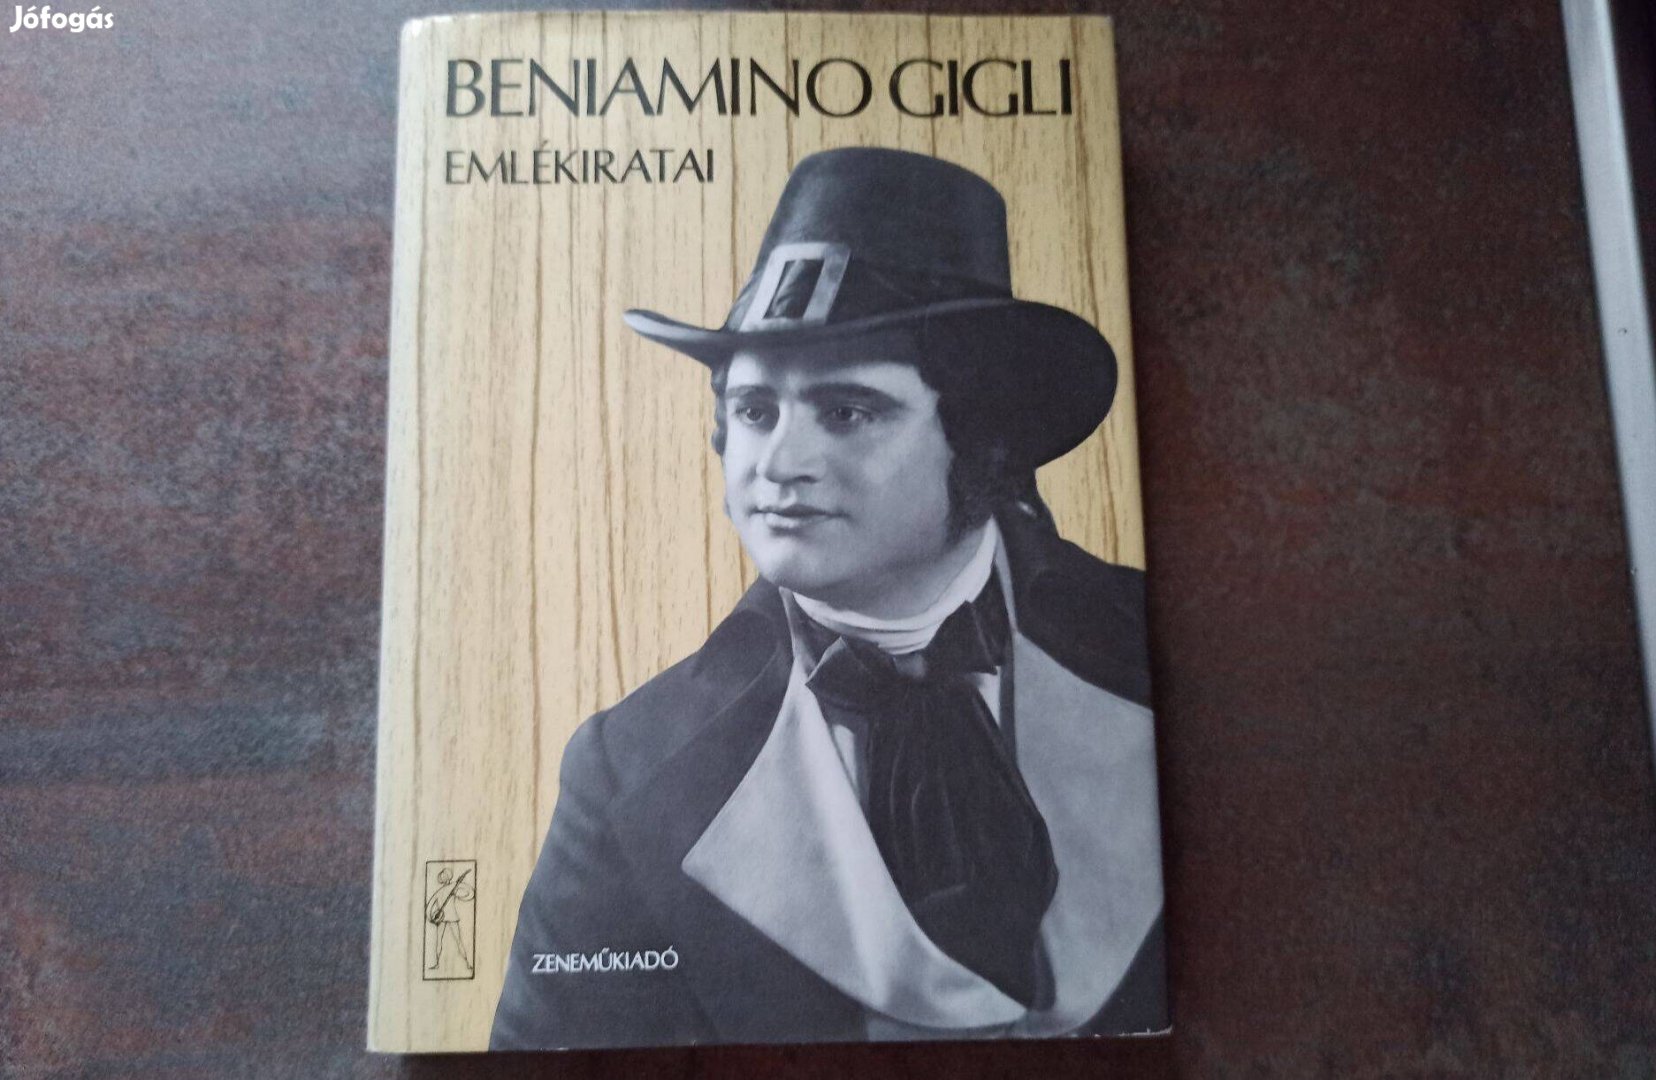 Beniamino Gigli olasz operaénekes emlékíratai című könyv